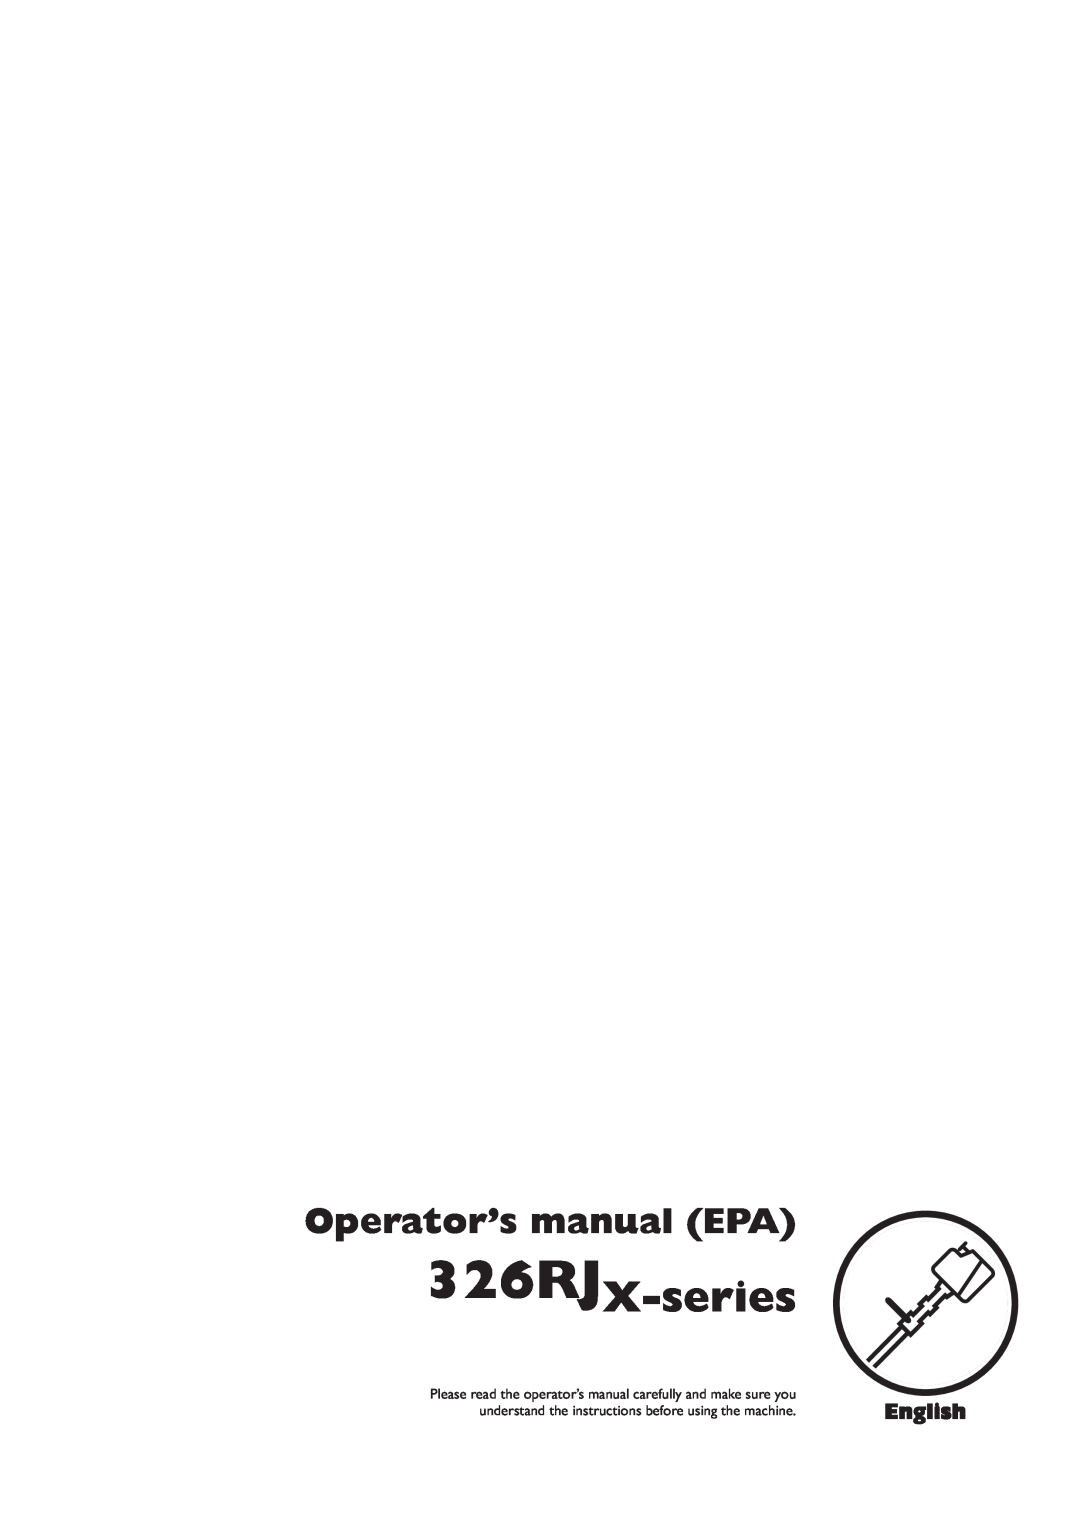 Husqvarna manual 326RJX-series, Operator’s manual EPA, English 